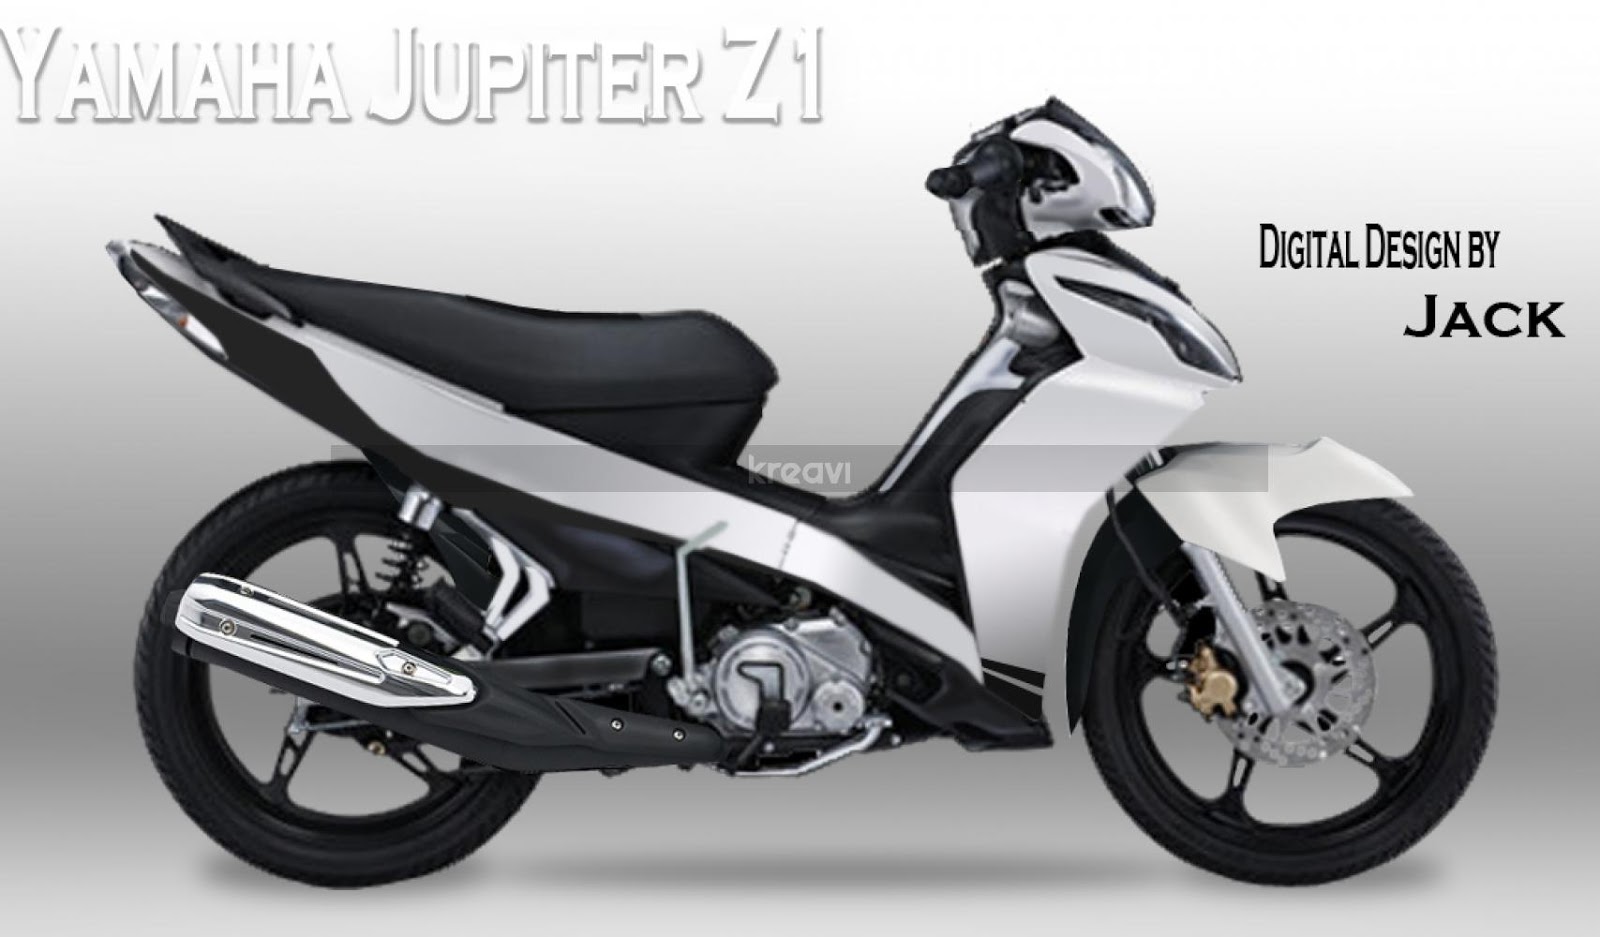 Yamaha Jupiter Z picture of motor 